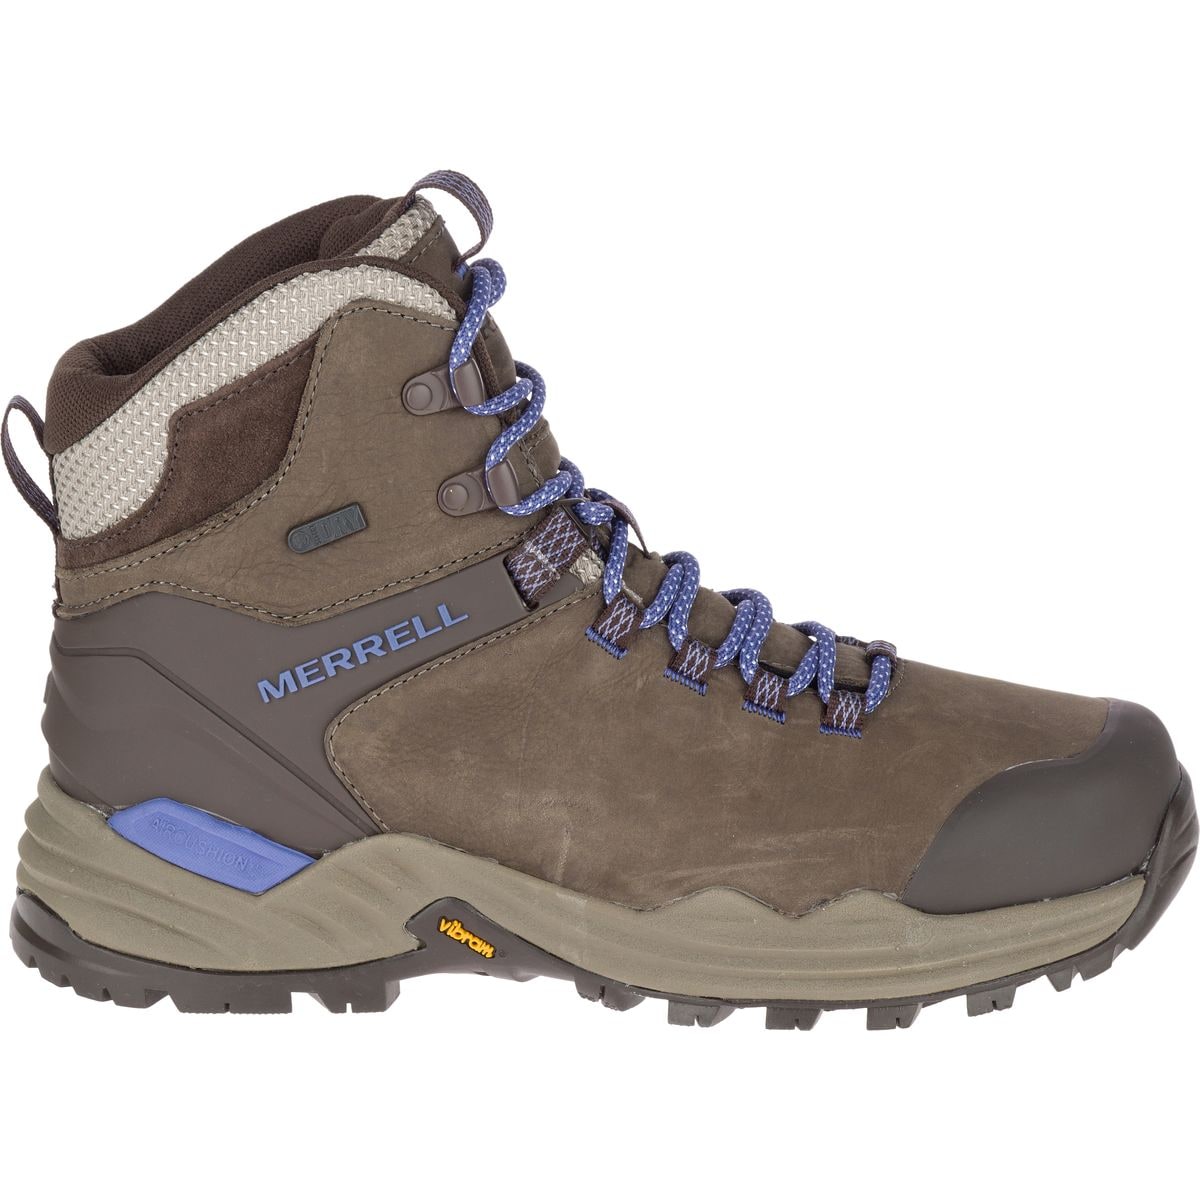 tall waterproof hiking boots